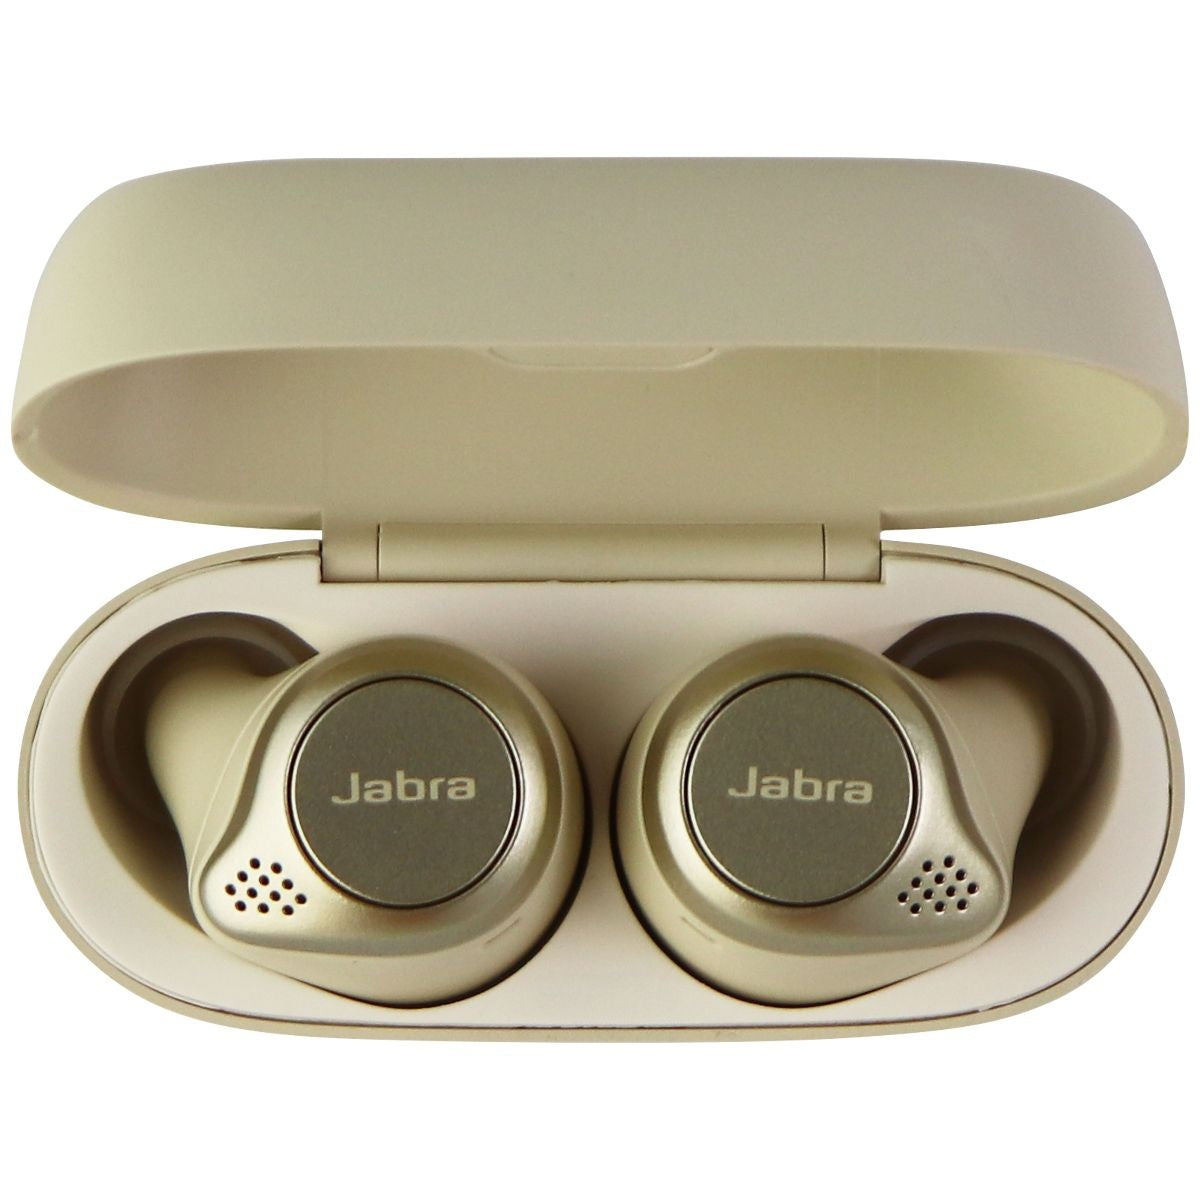 Jabra Elite 75t True Wireless Earbuds with Charging Case - Gold Beige Portable Audio - Headphones Jabra    - Simple Cell Bulk Wholesale Pricing - USA Seller